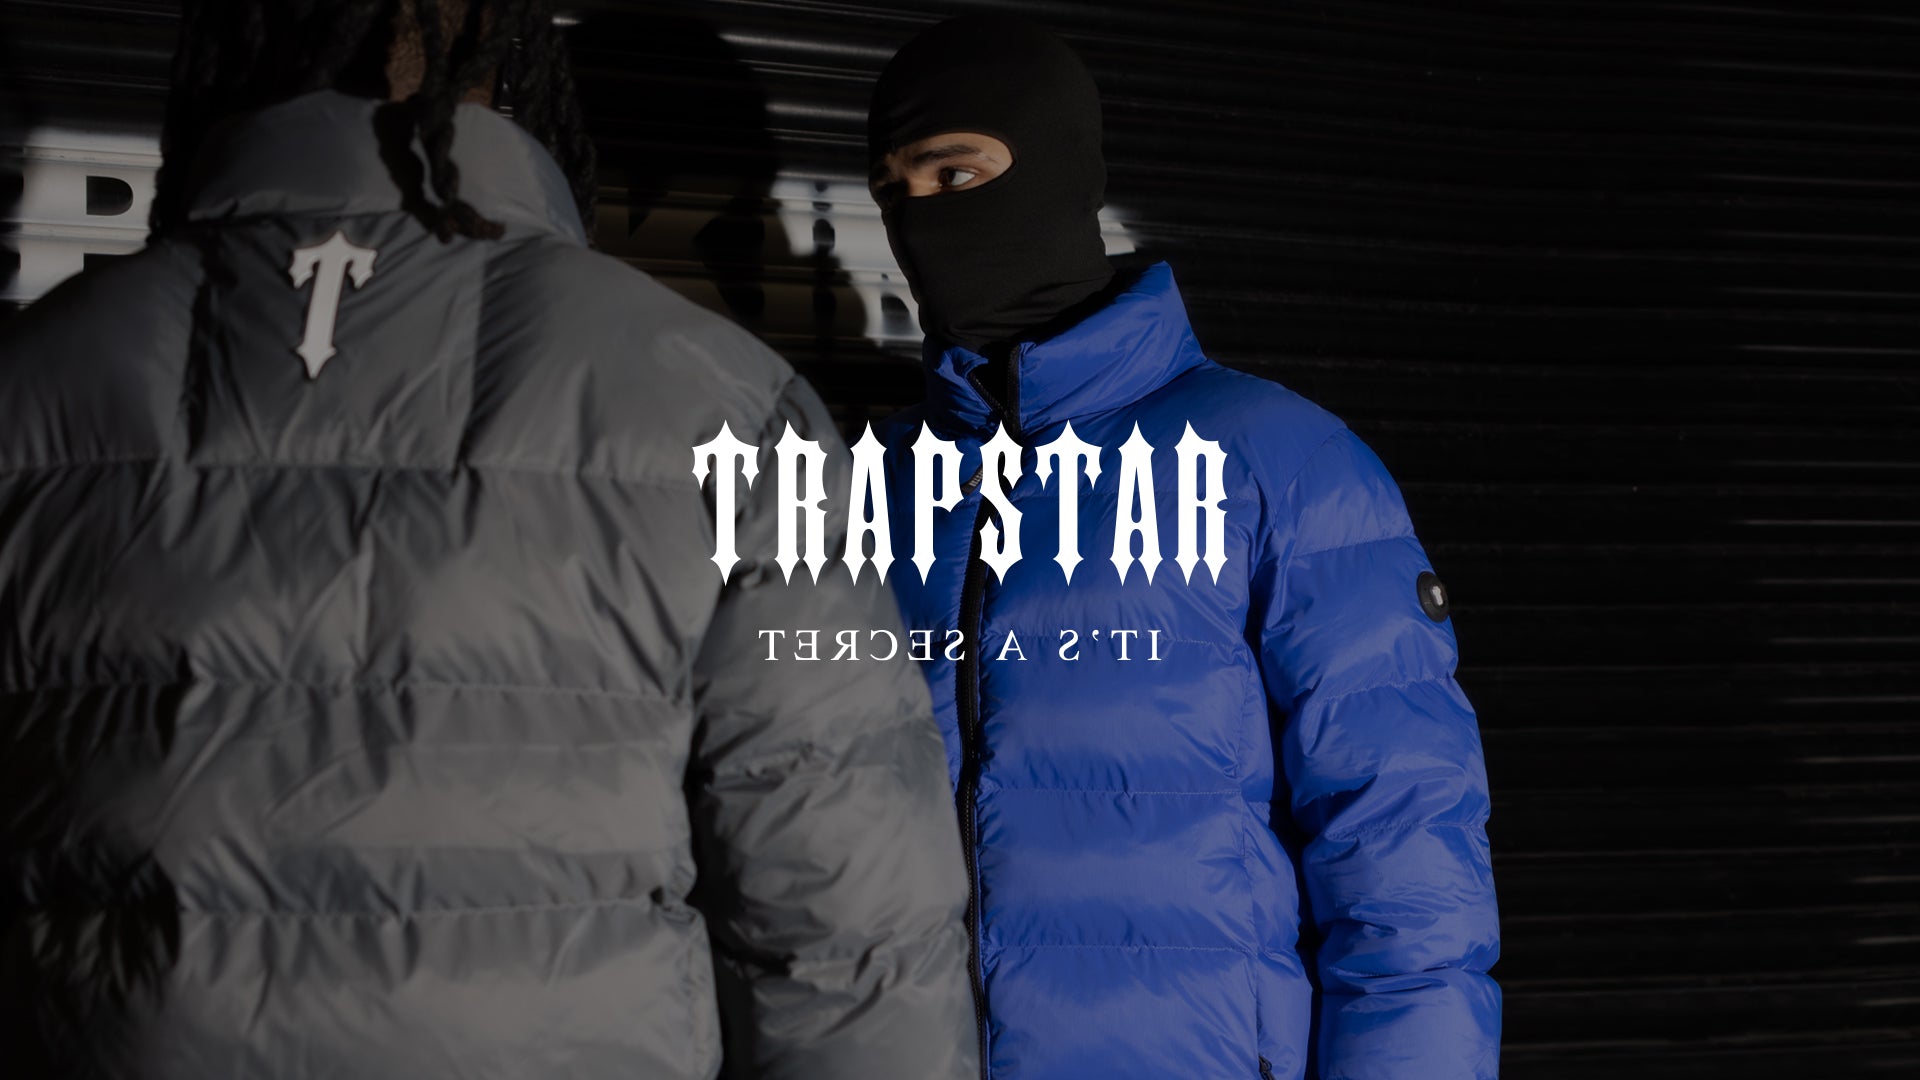 Conjunto Trapstar blanco logo tricolor – zapasstreet